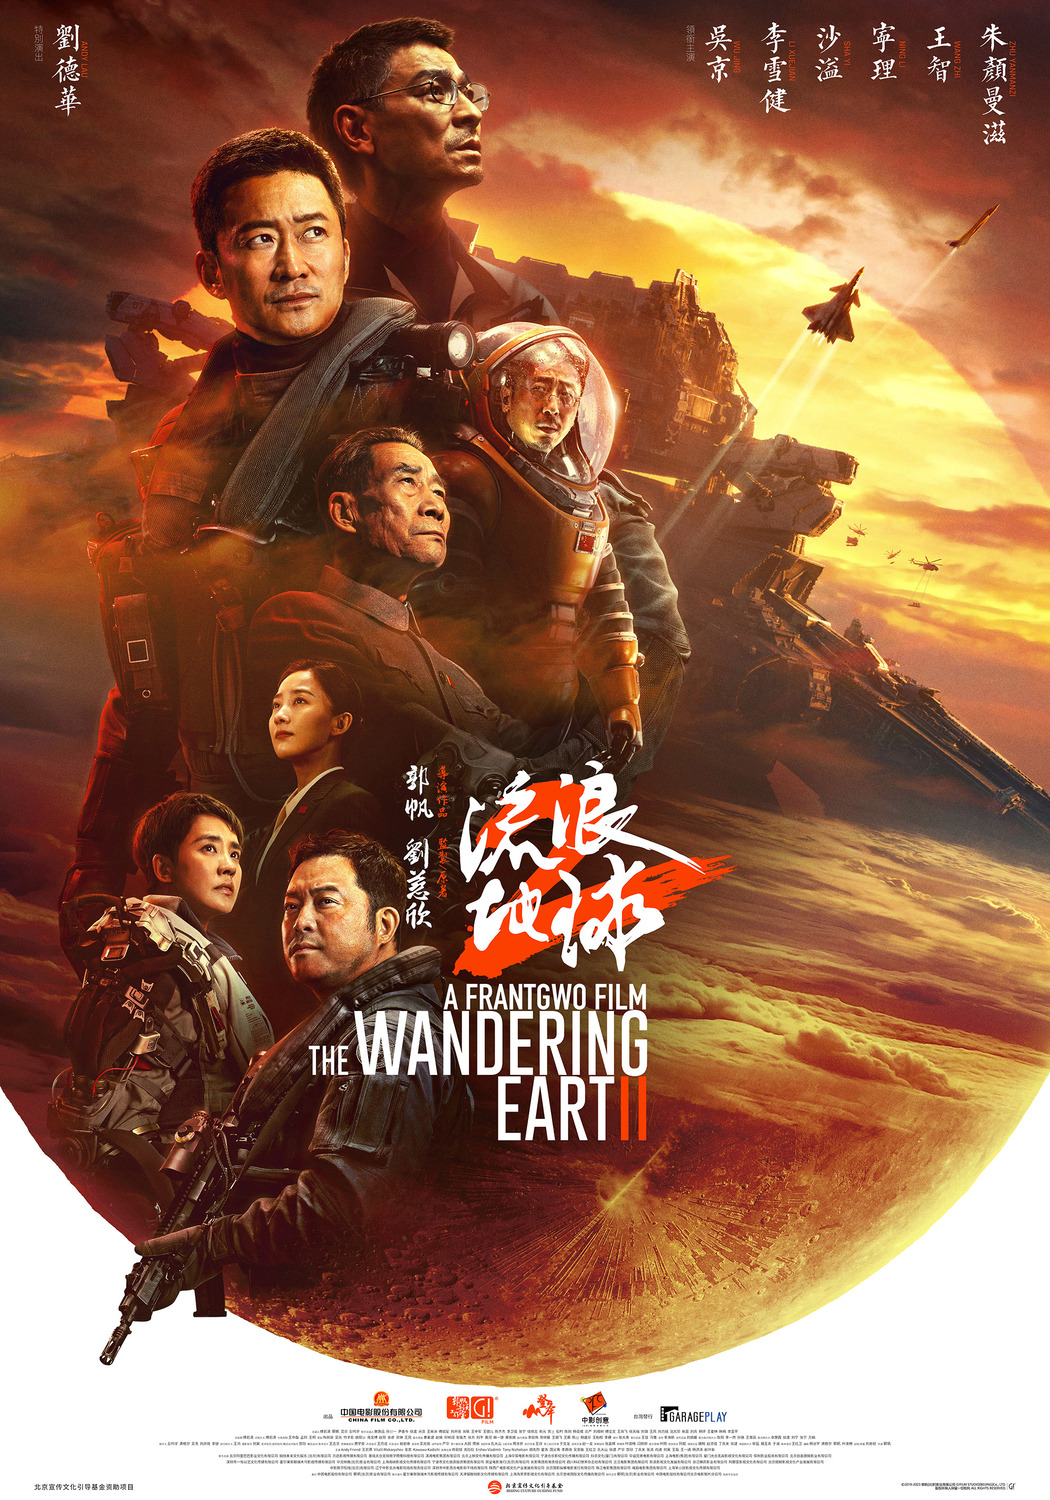 Extra Large Movie Poster Image for Liu lang di qiu 2 